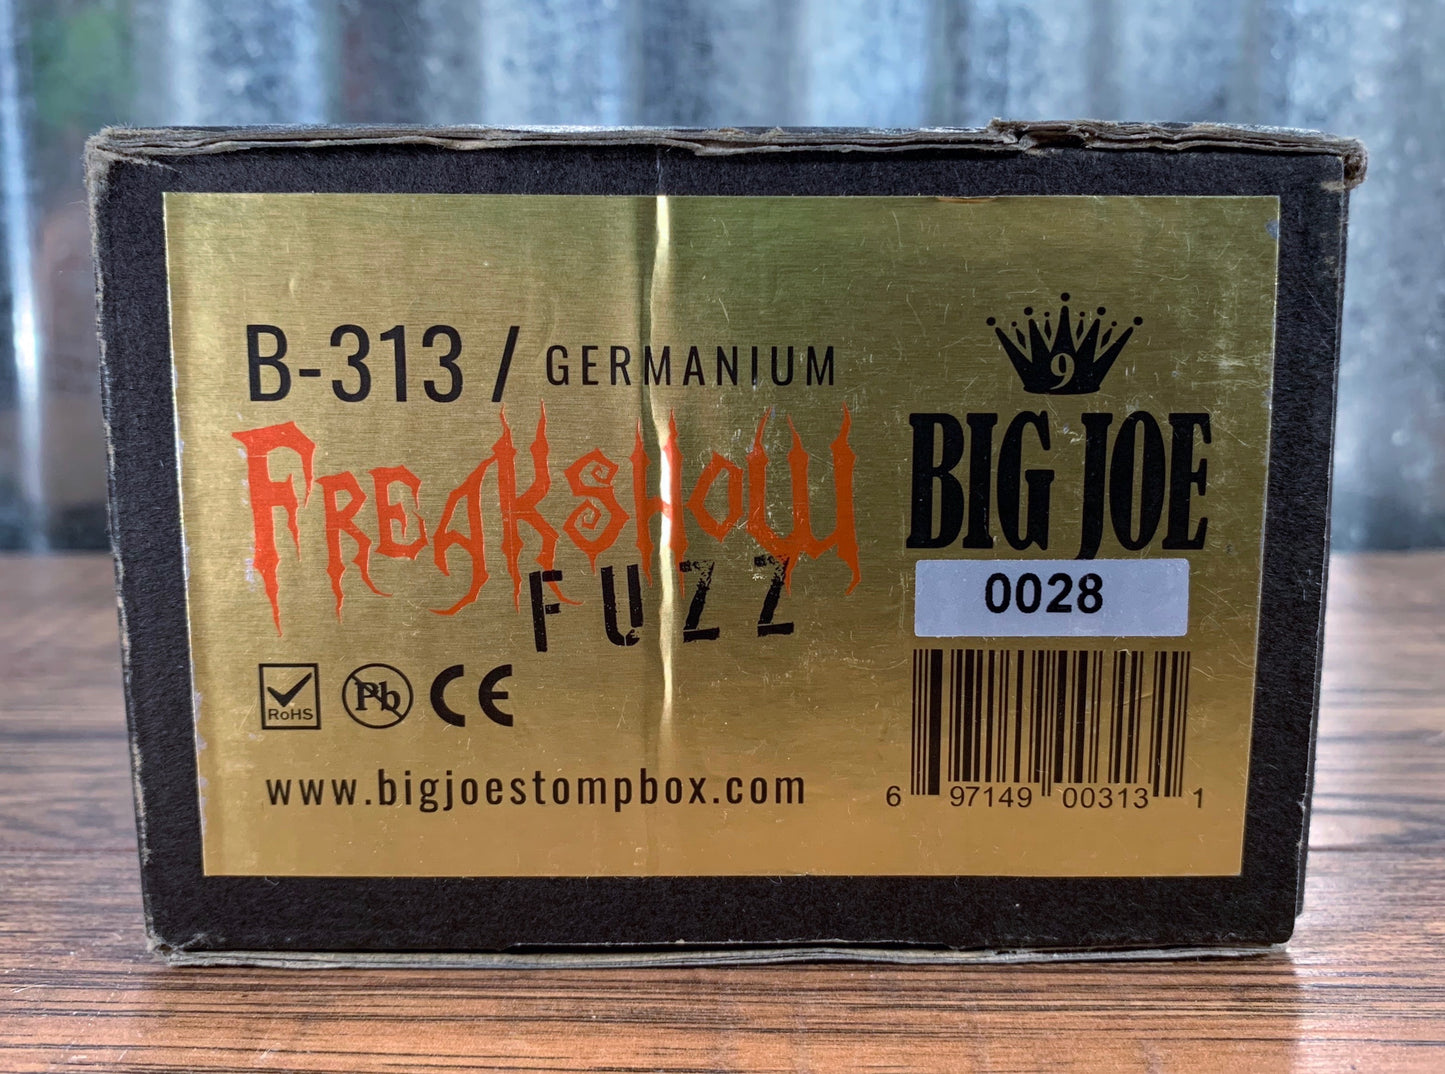 Big Joe Stompbox Company Analog Freakshow Fuzz (Germanium) B-313 Big Joe Series Fuzz Guitar Effects Pedal